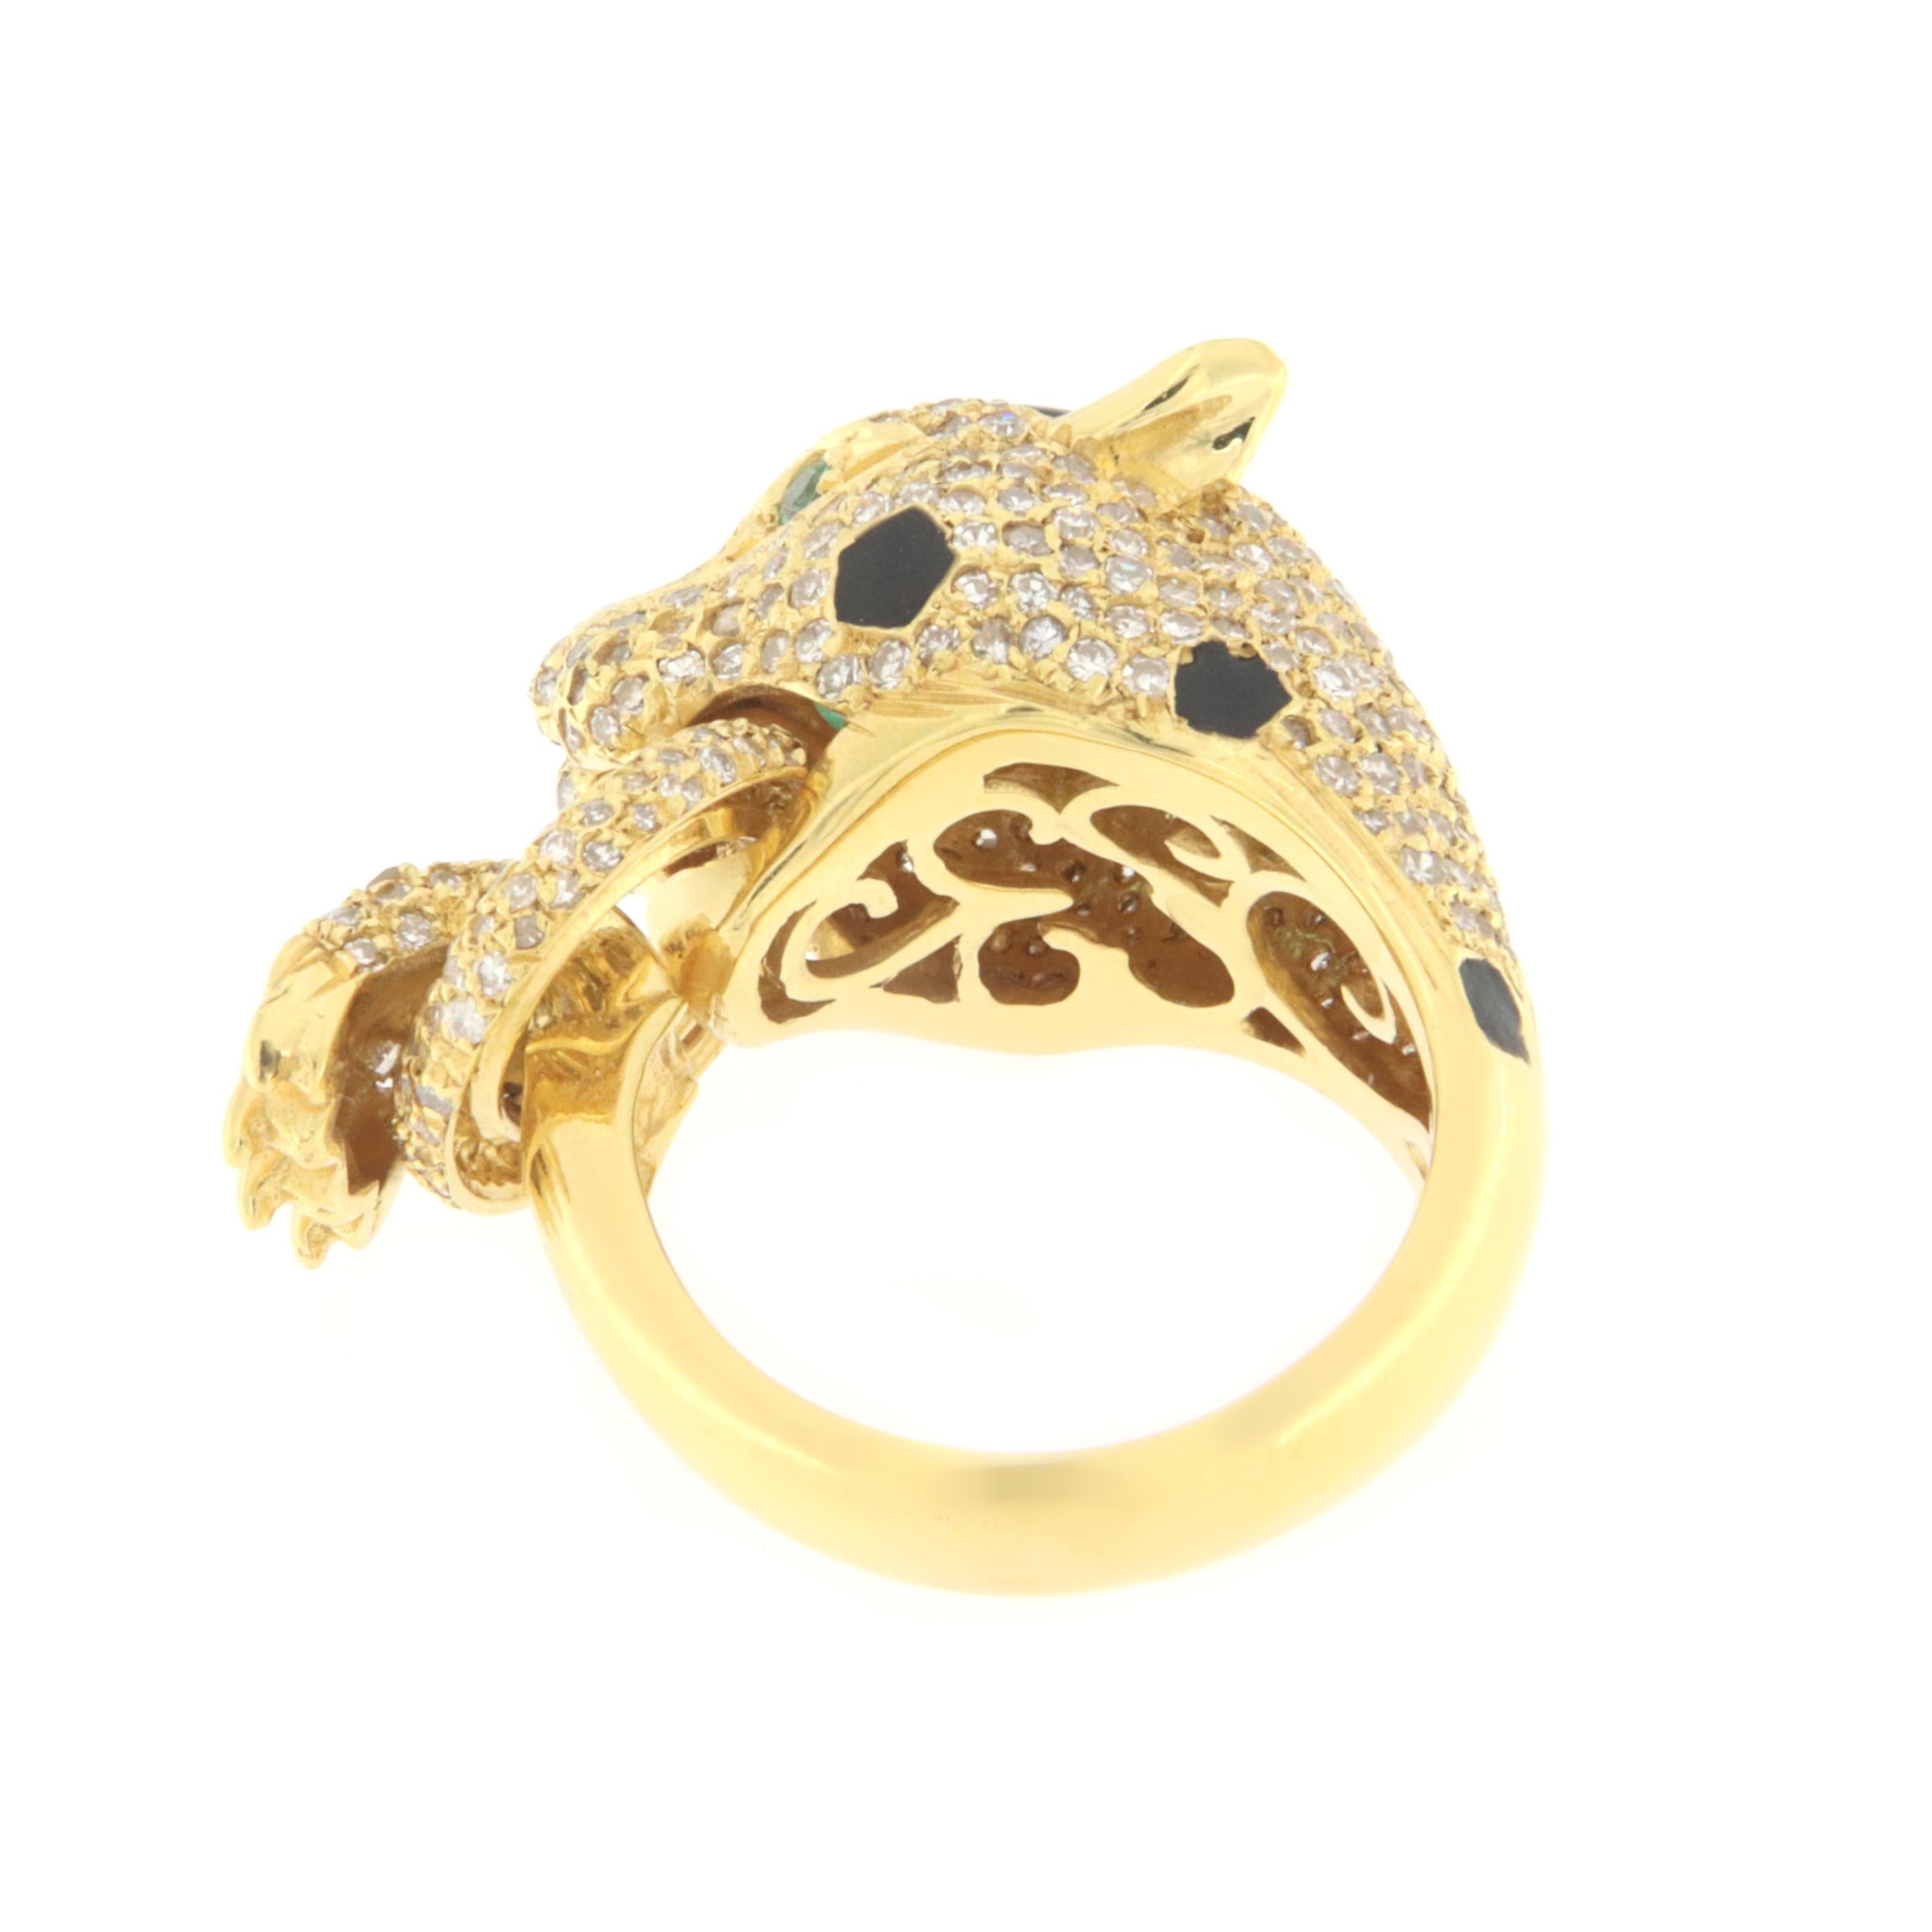 Brilliant Cut Cougar Diamonds Emeralds 18 Karat Yellow Gold Diamonds Cocktail Ring For Sale